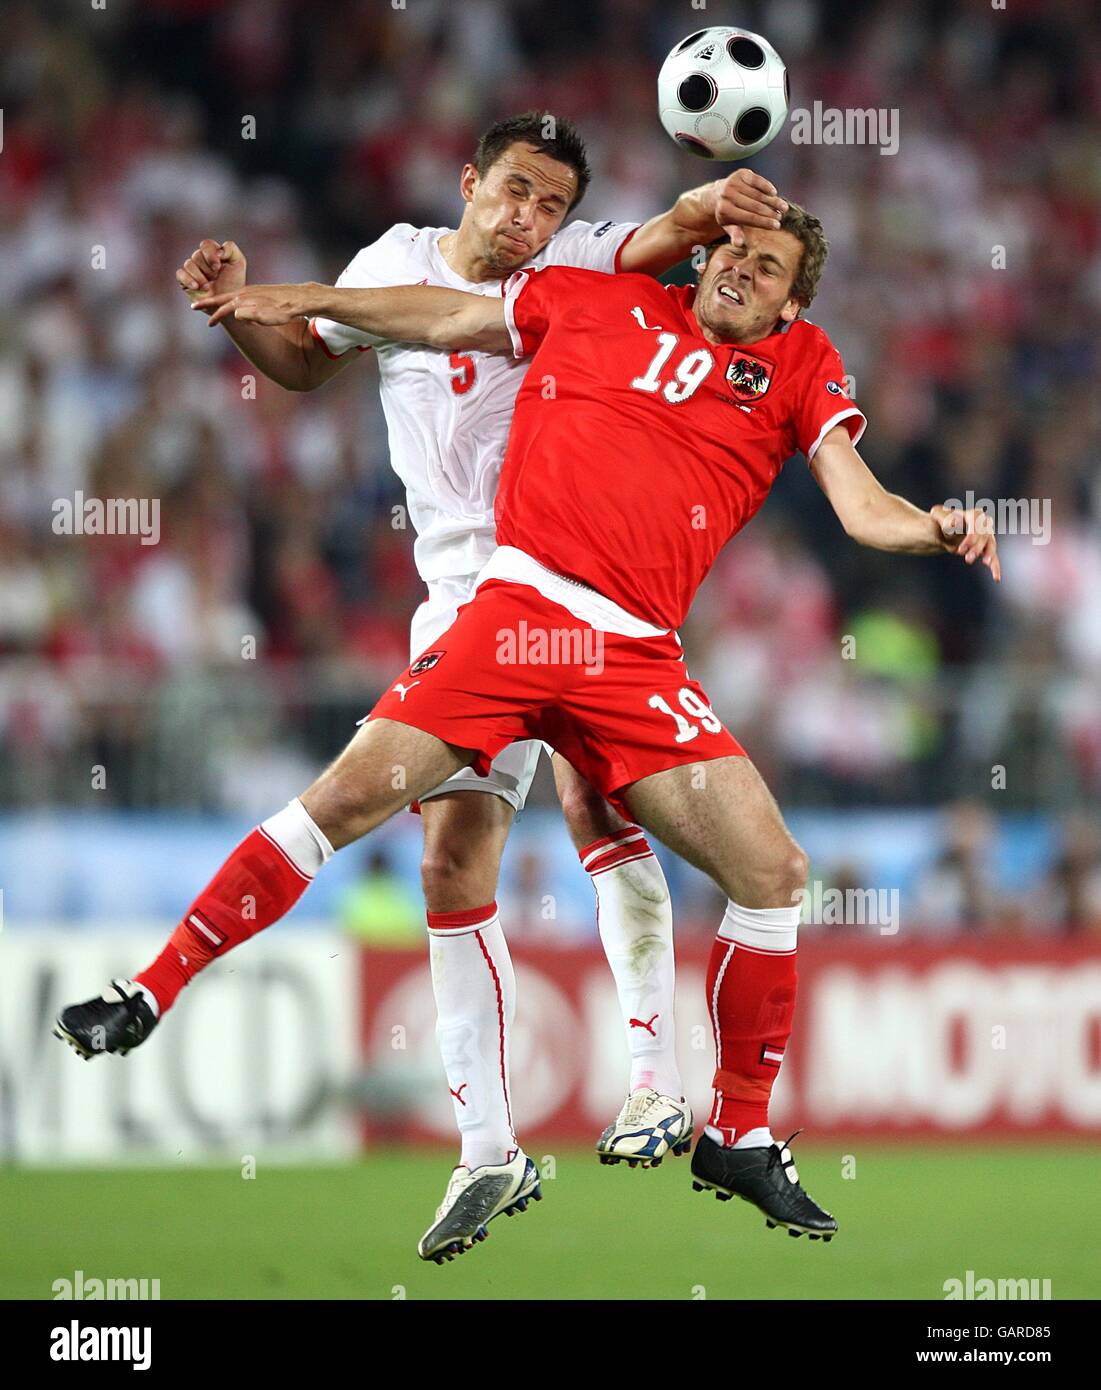 Austria's Jurgen Saumel (r) and Poland's Dariusz Dudka battle for the ball Stock Photo